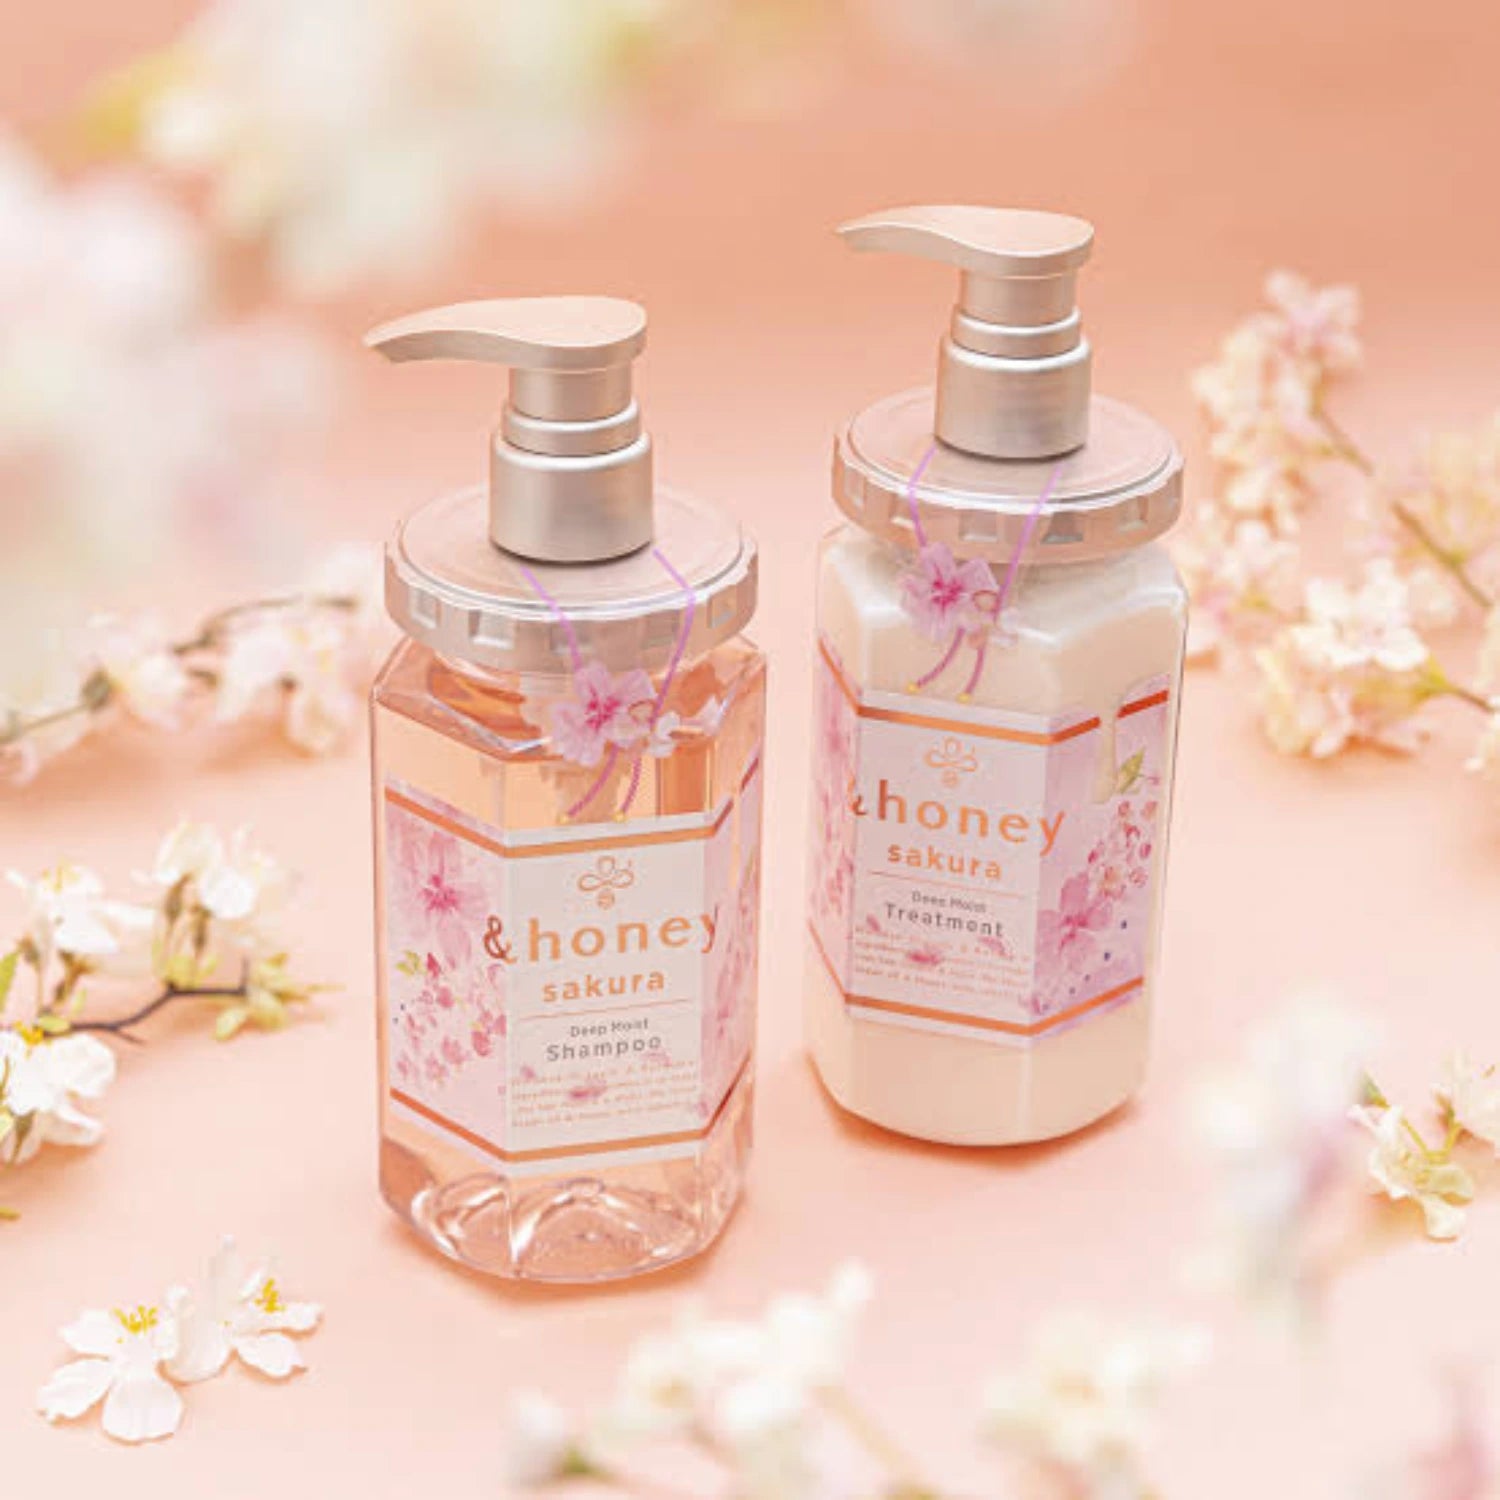 & Honey Sakura Limited Edition Shampoo & Treatment Set 440ml Each - Buy Me Japan